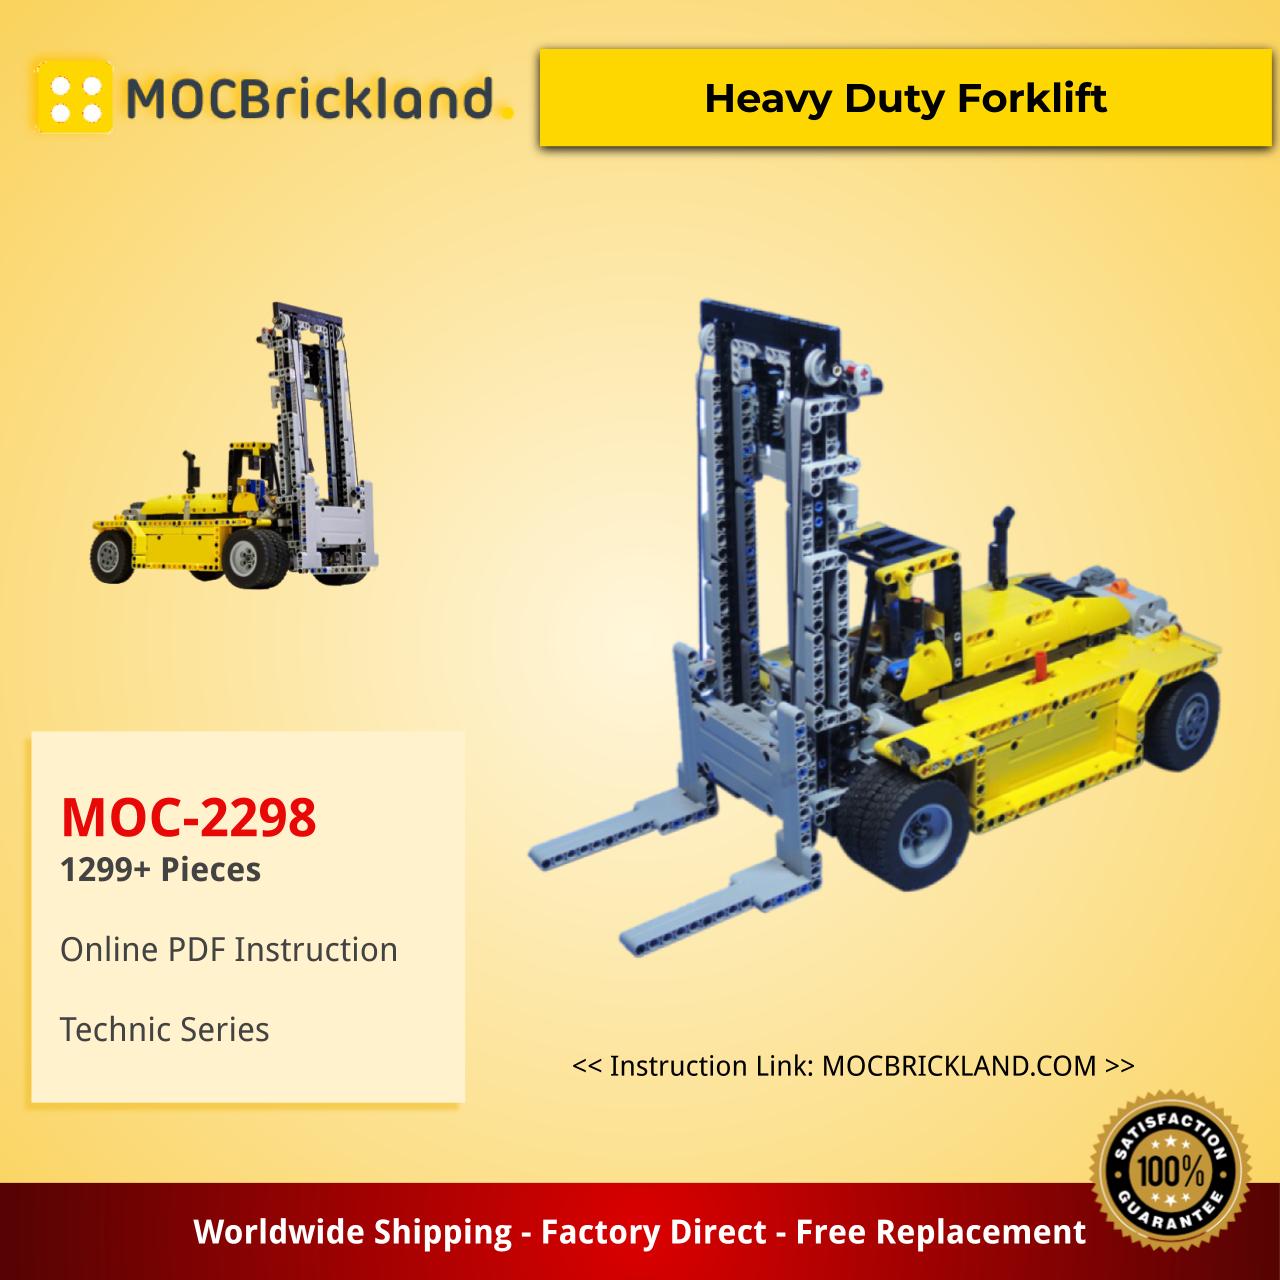 Technic MOC-2298 42009 Alternate: Heavy Duty Forklift by Dalafik MOCBRICKLAND